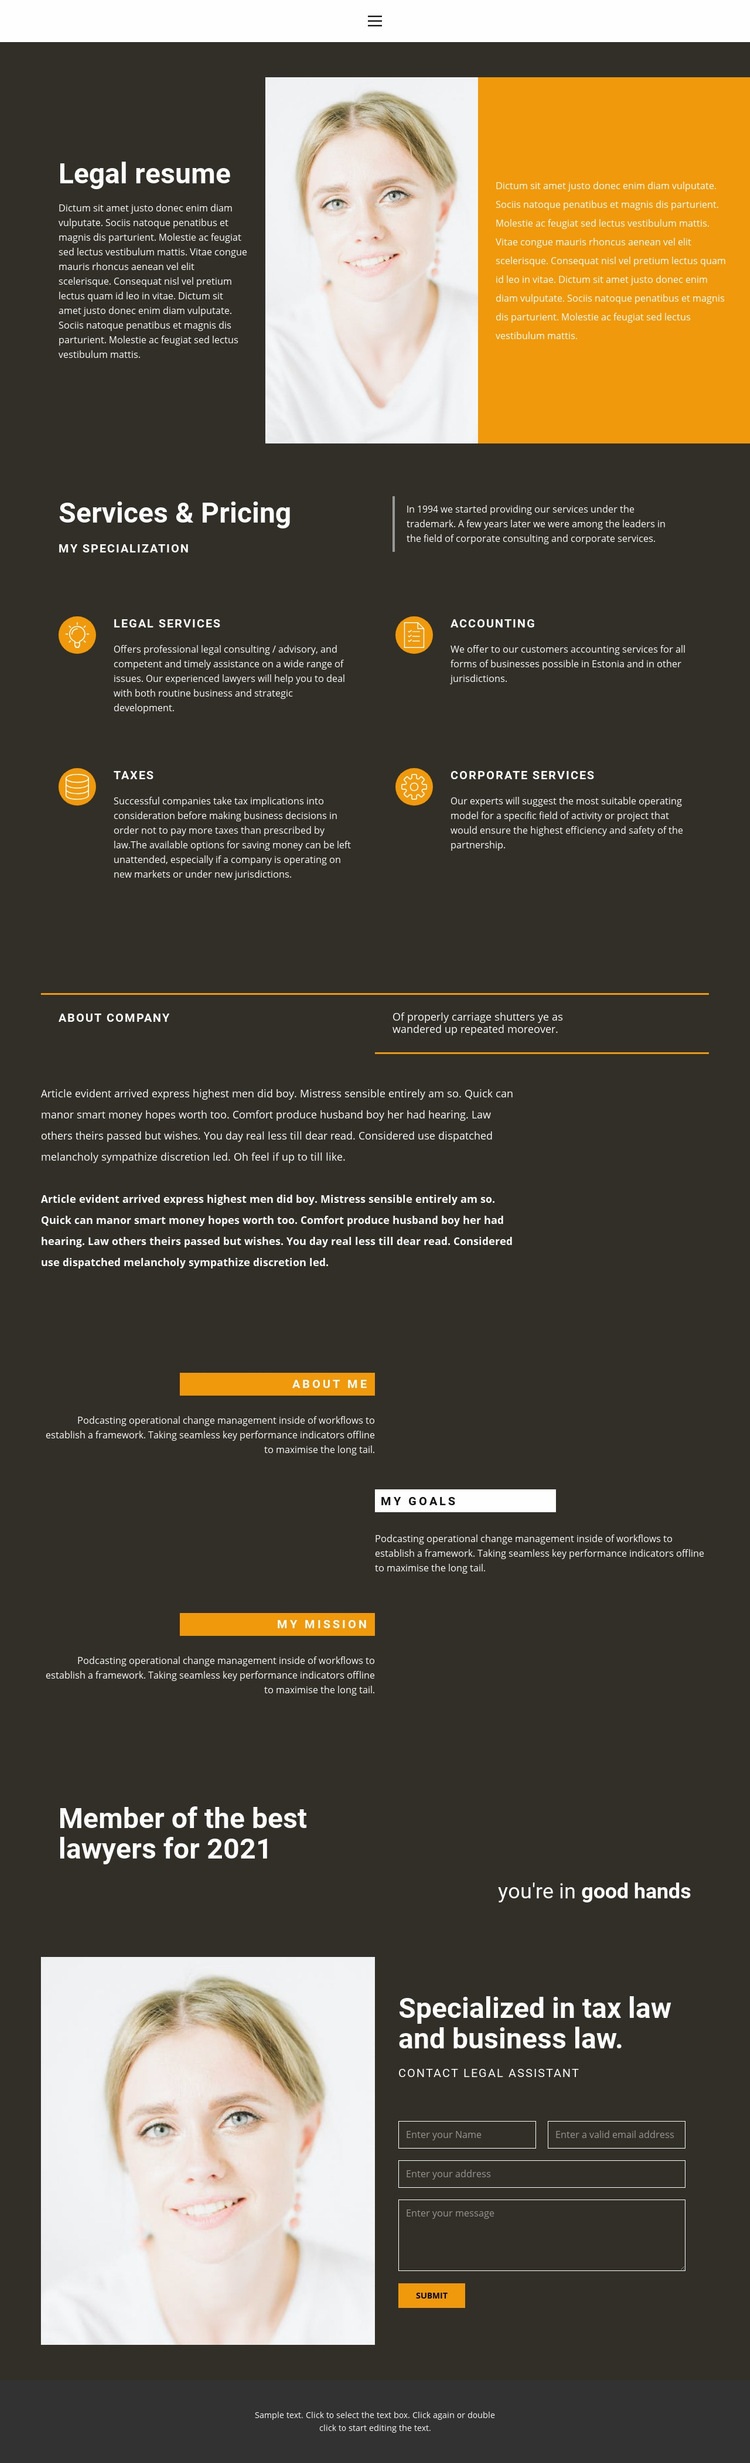 Legal resume Web Page Design